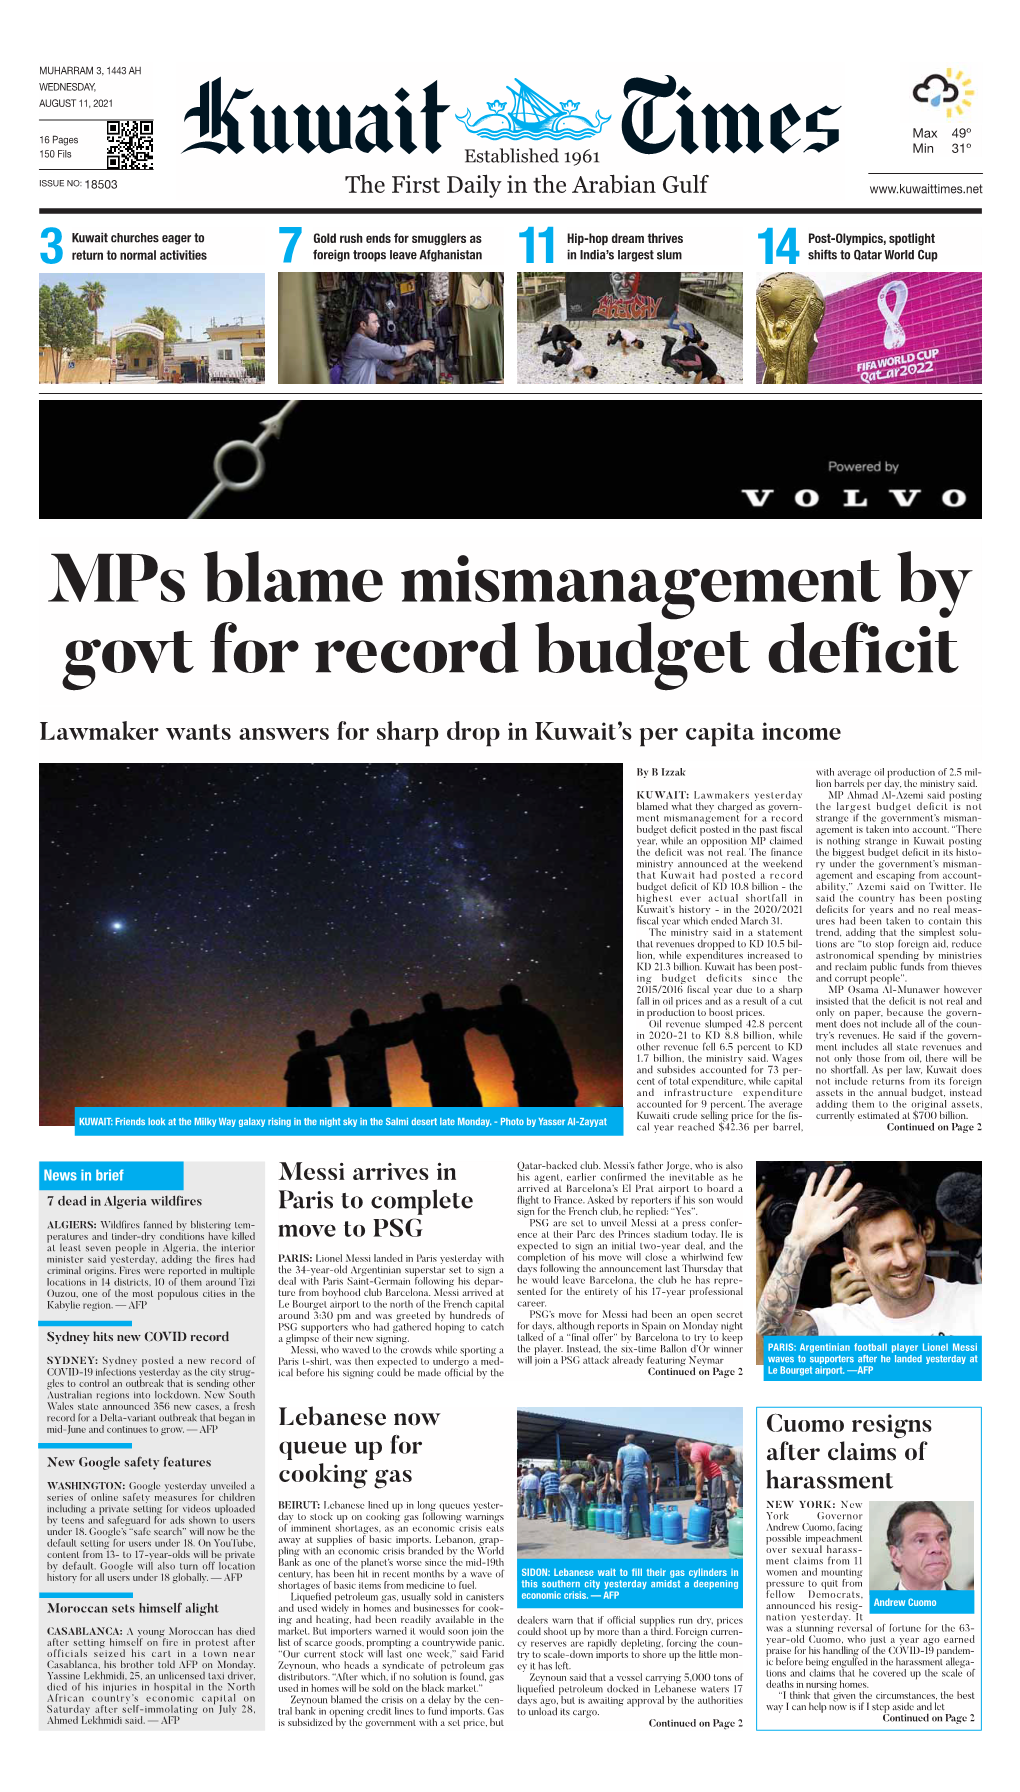 Mps Blame Mismanagement by Govt for Record Budget Deficit